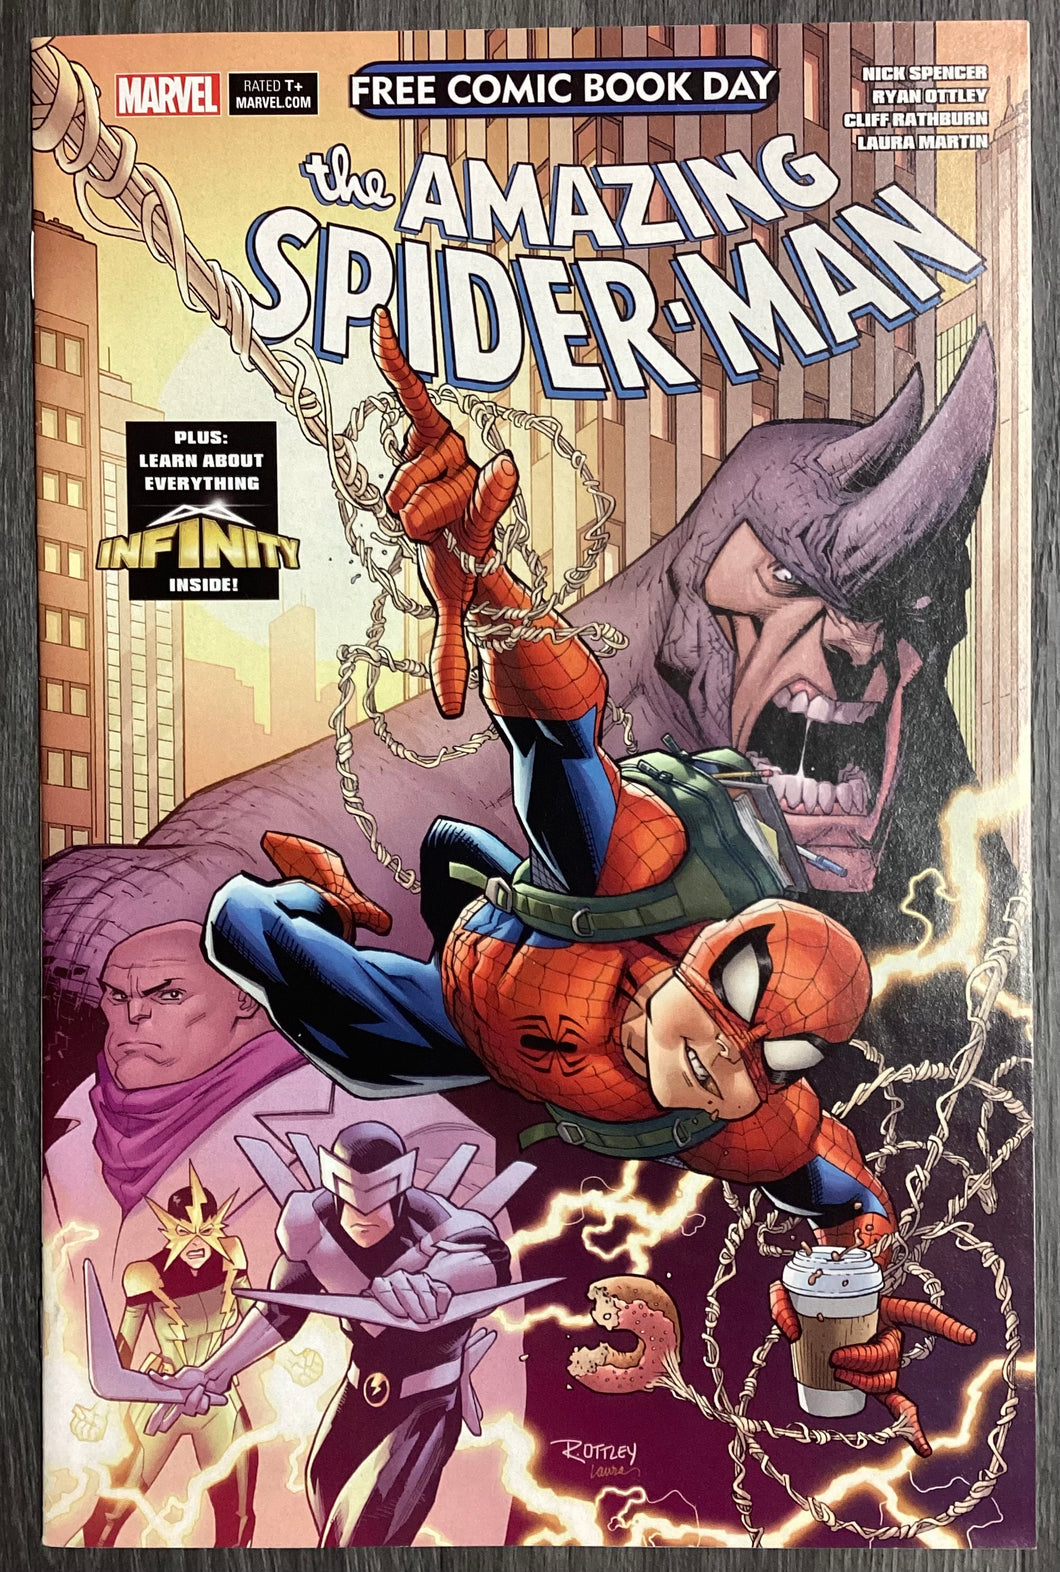 The Amazing Spider-Man No. #1 FCBD 2018 Marvel Comics